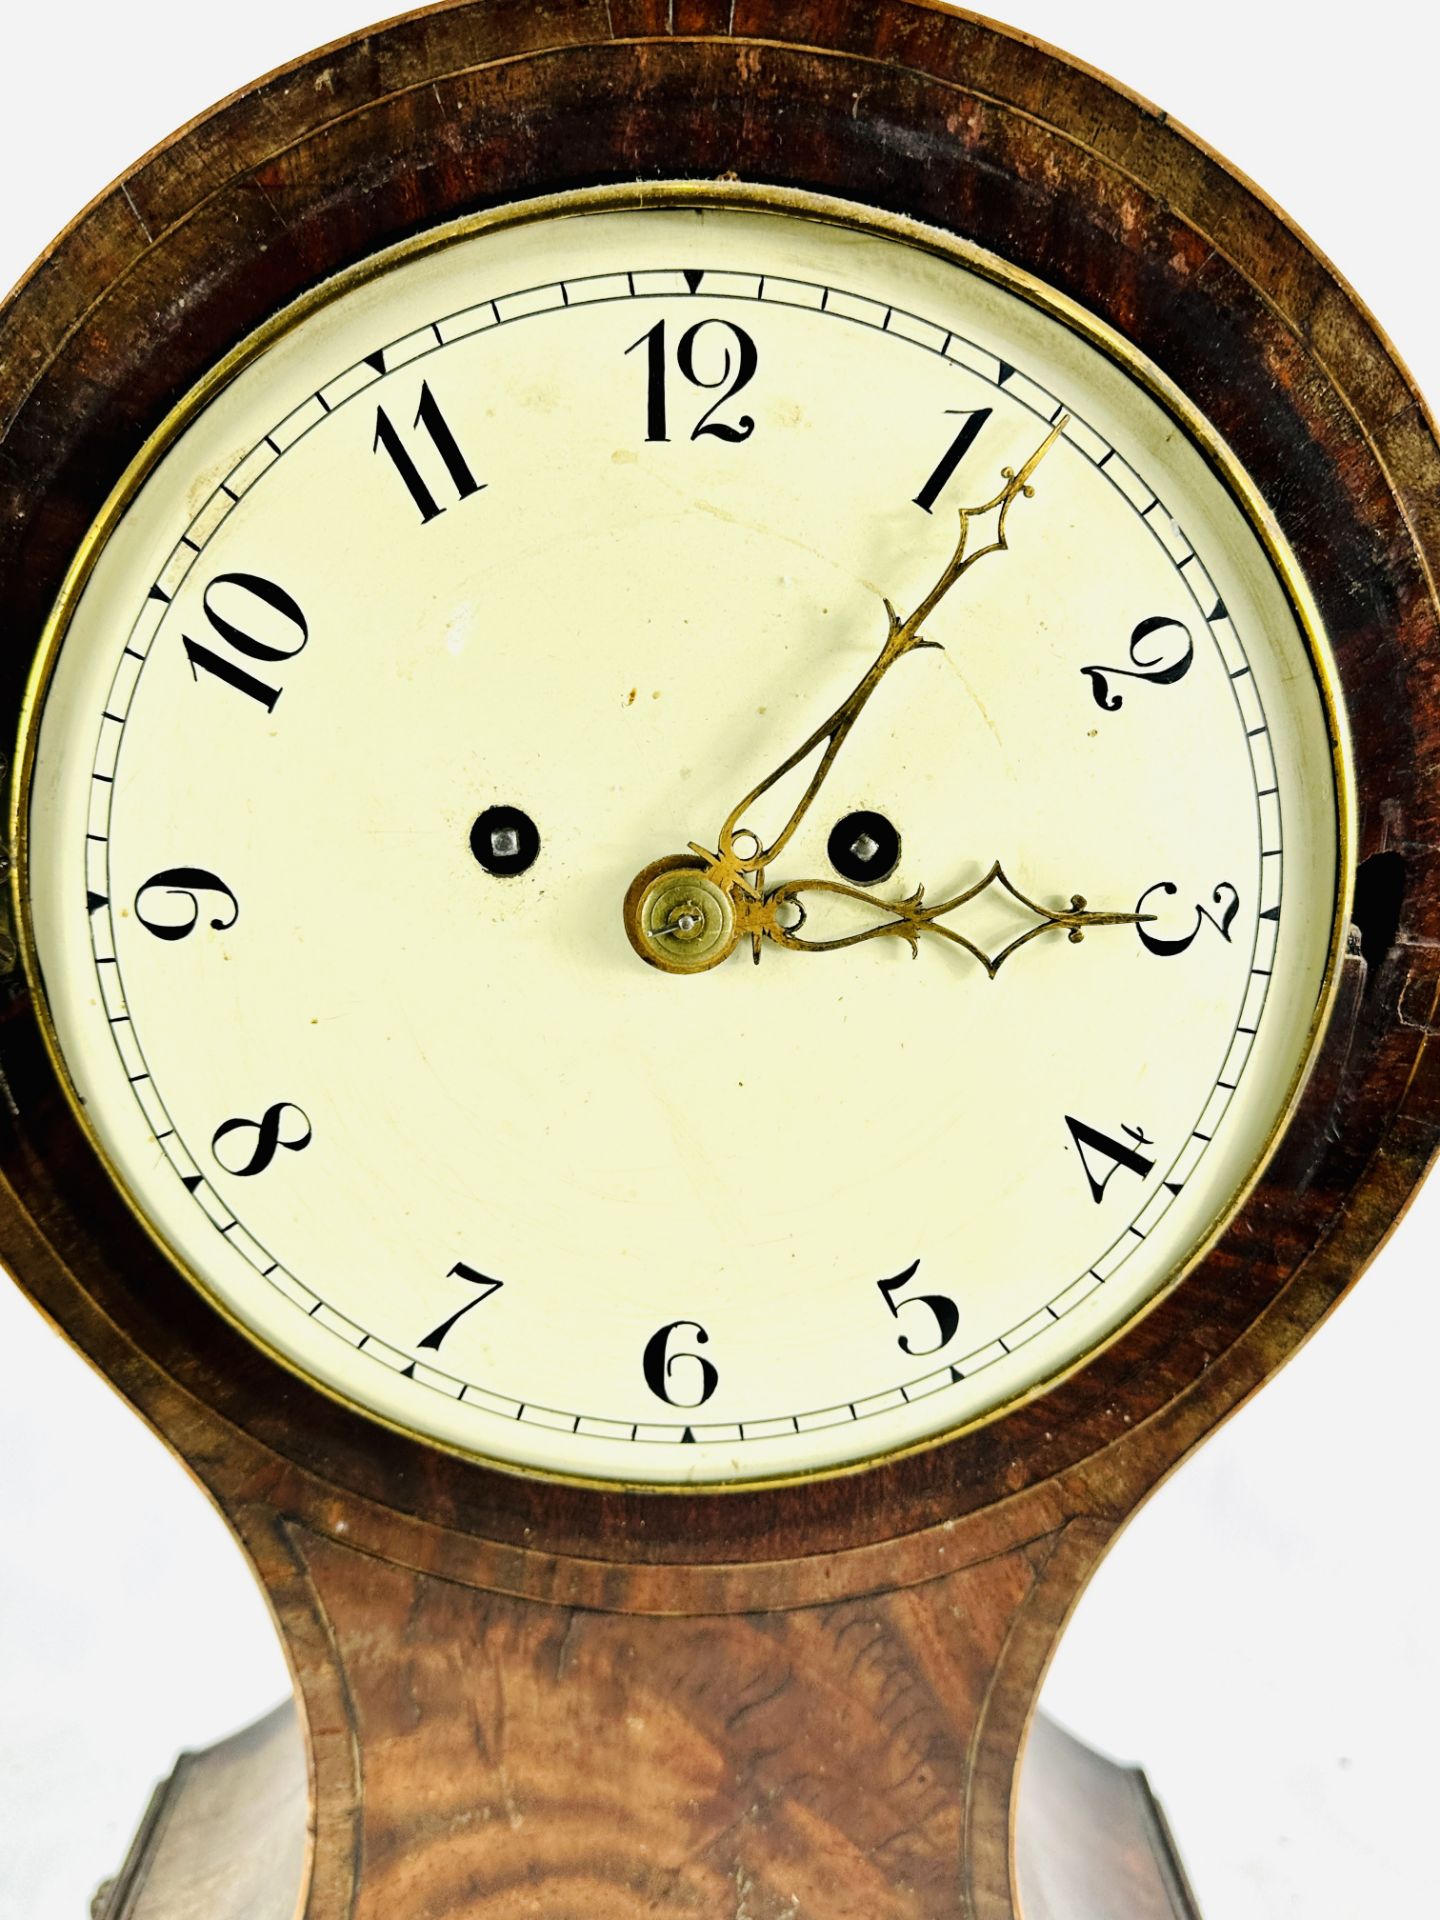 Mahogany cased mantle clock - Image 2 of 5